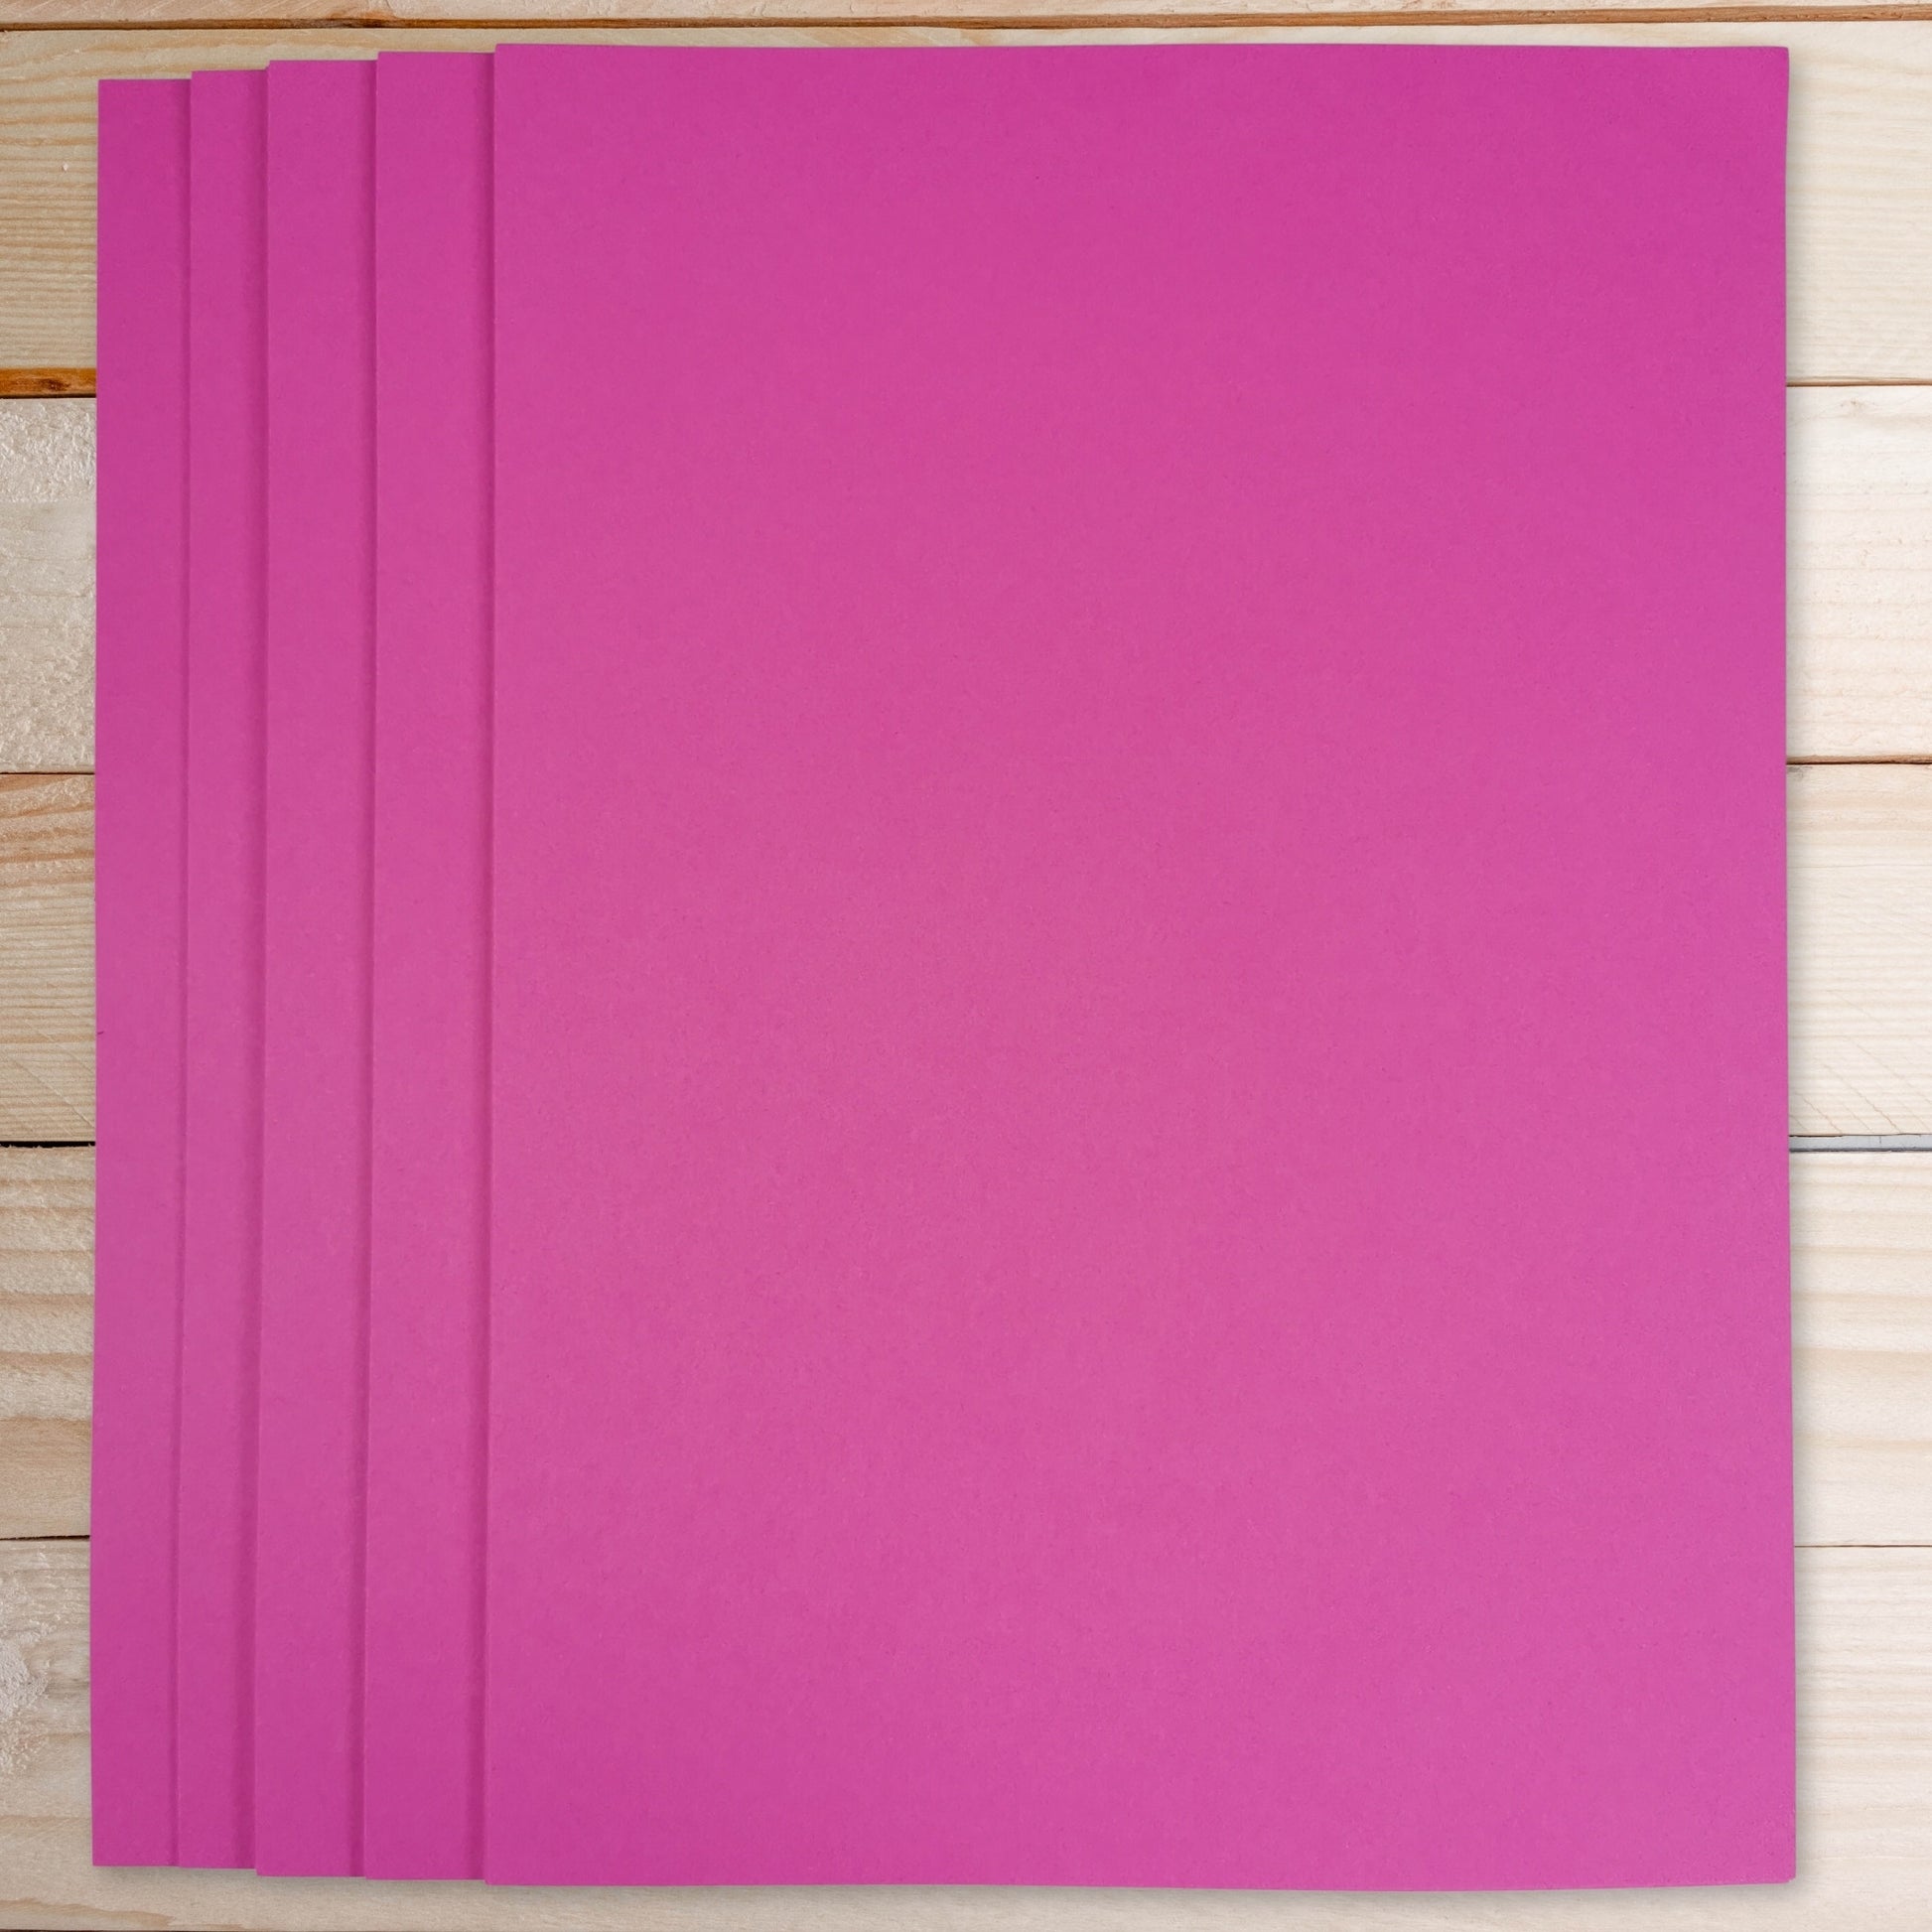 Dark Pink A4 297 x 210mm Coloured Paper